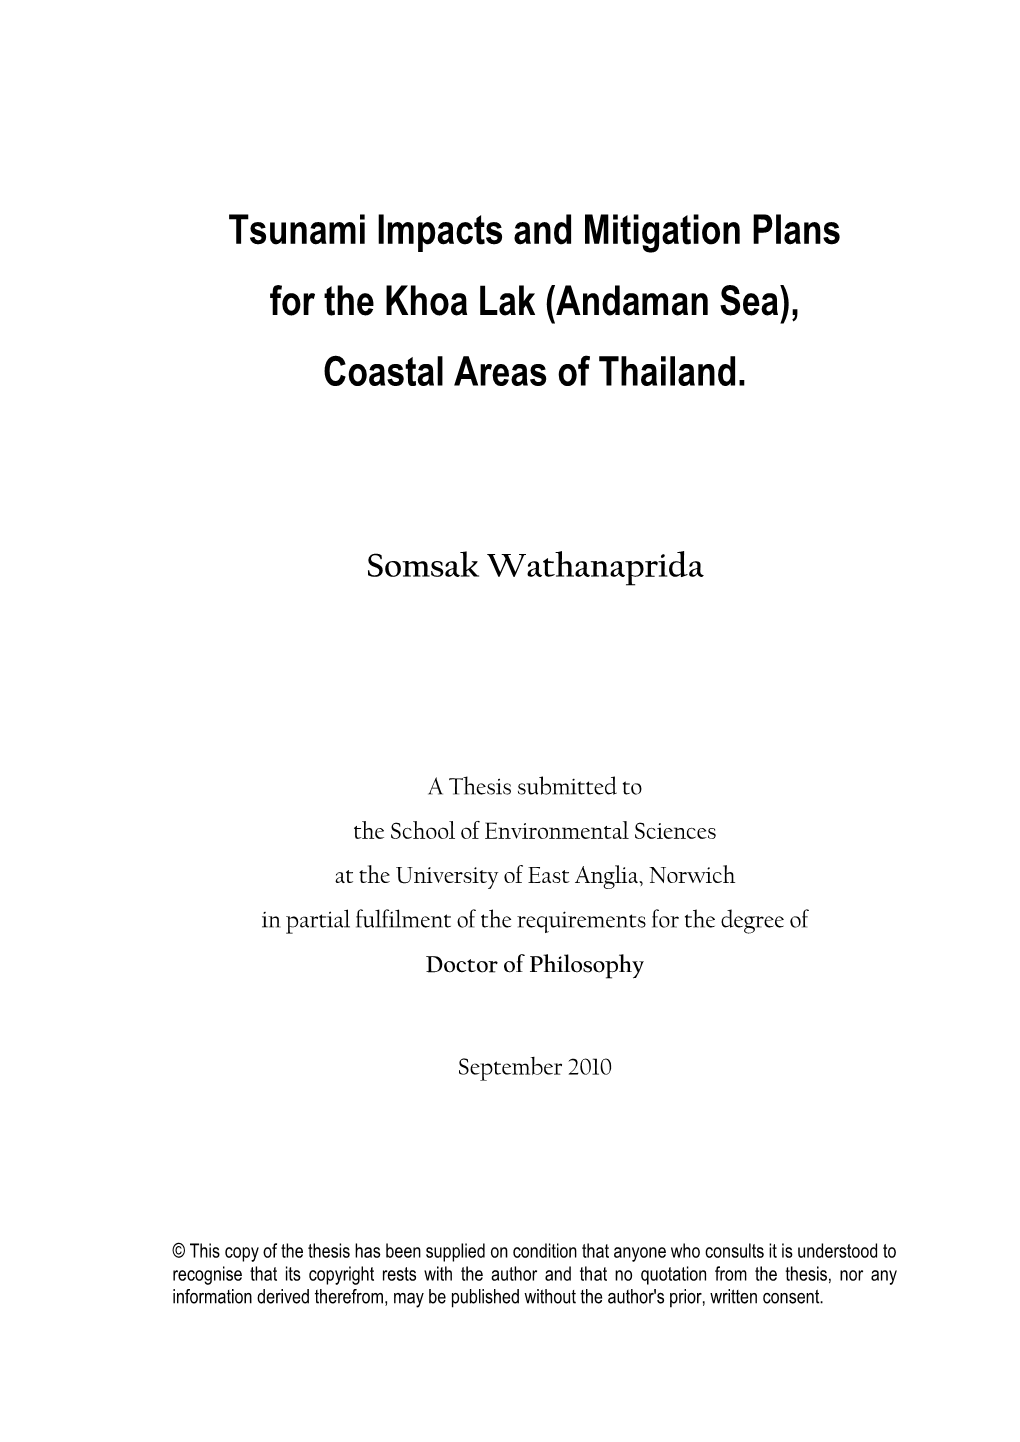 Tsunami Impacts and Mitigation Plans for the Khoa Lak (Andaman Sea), Coastal Areas of Thailand